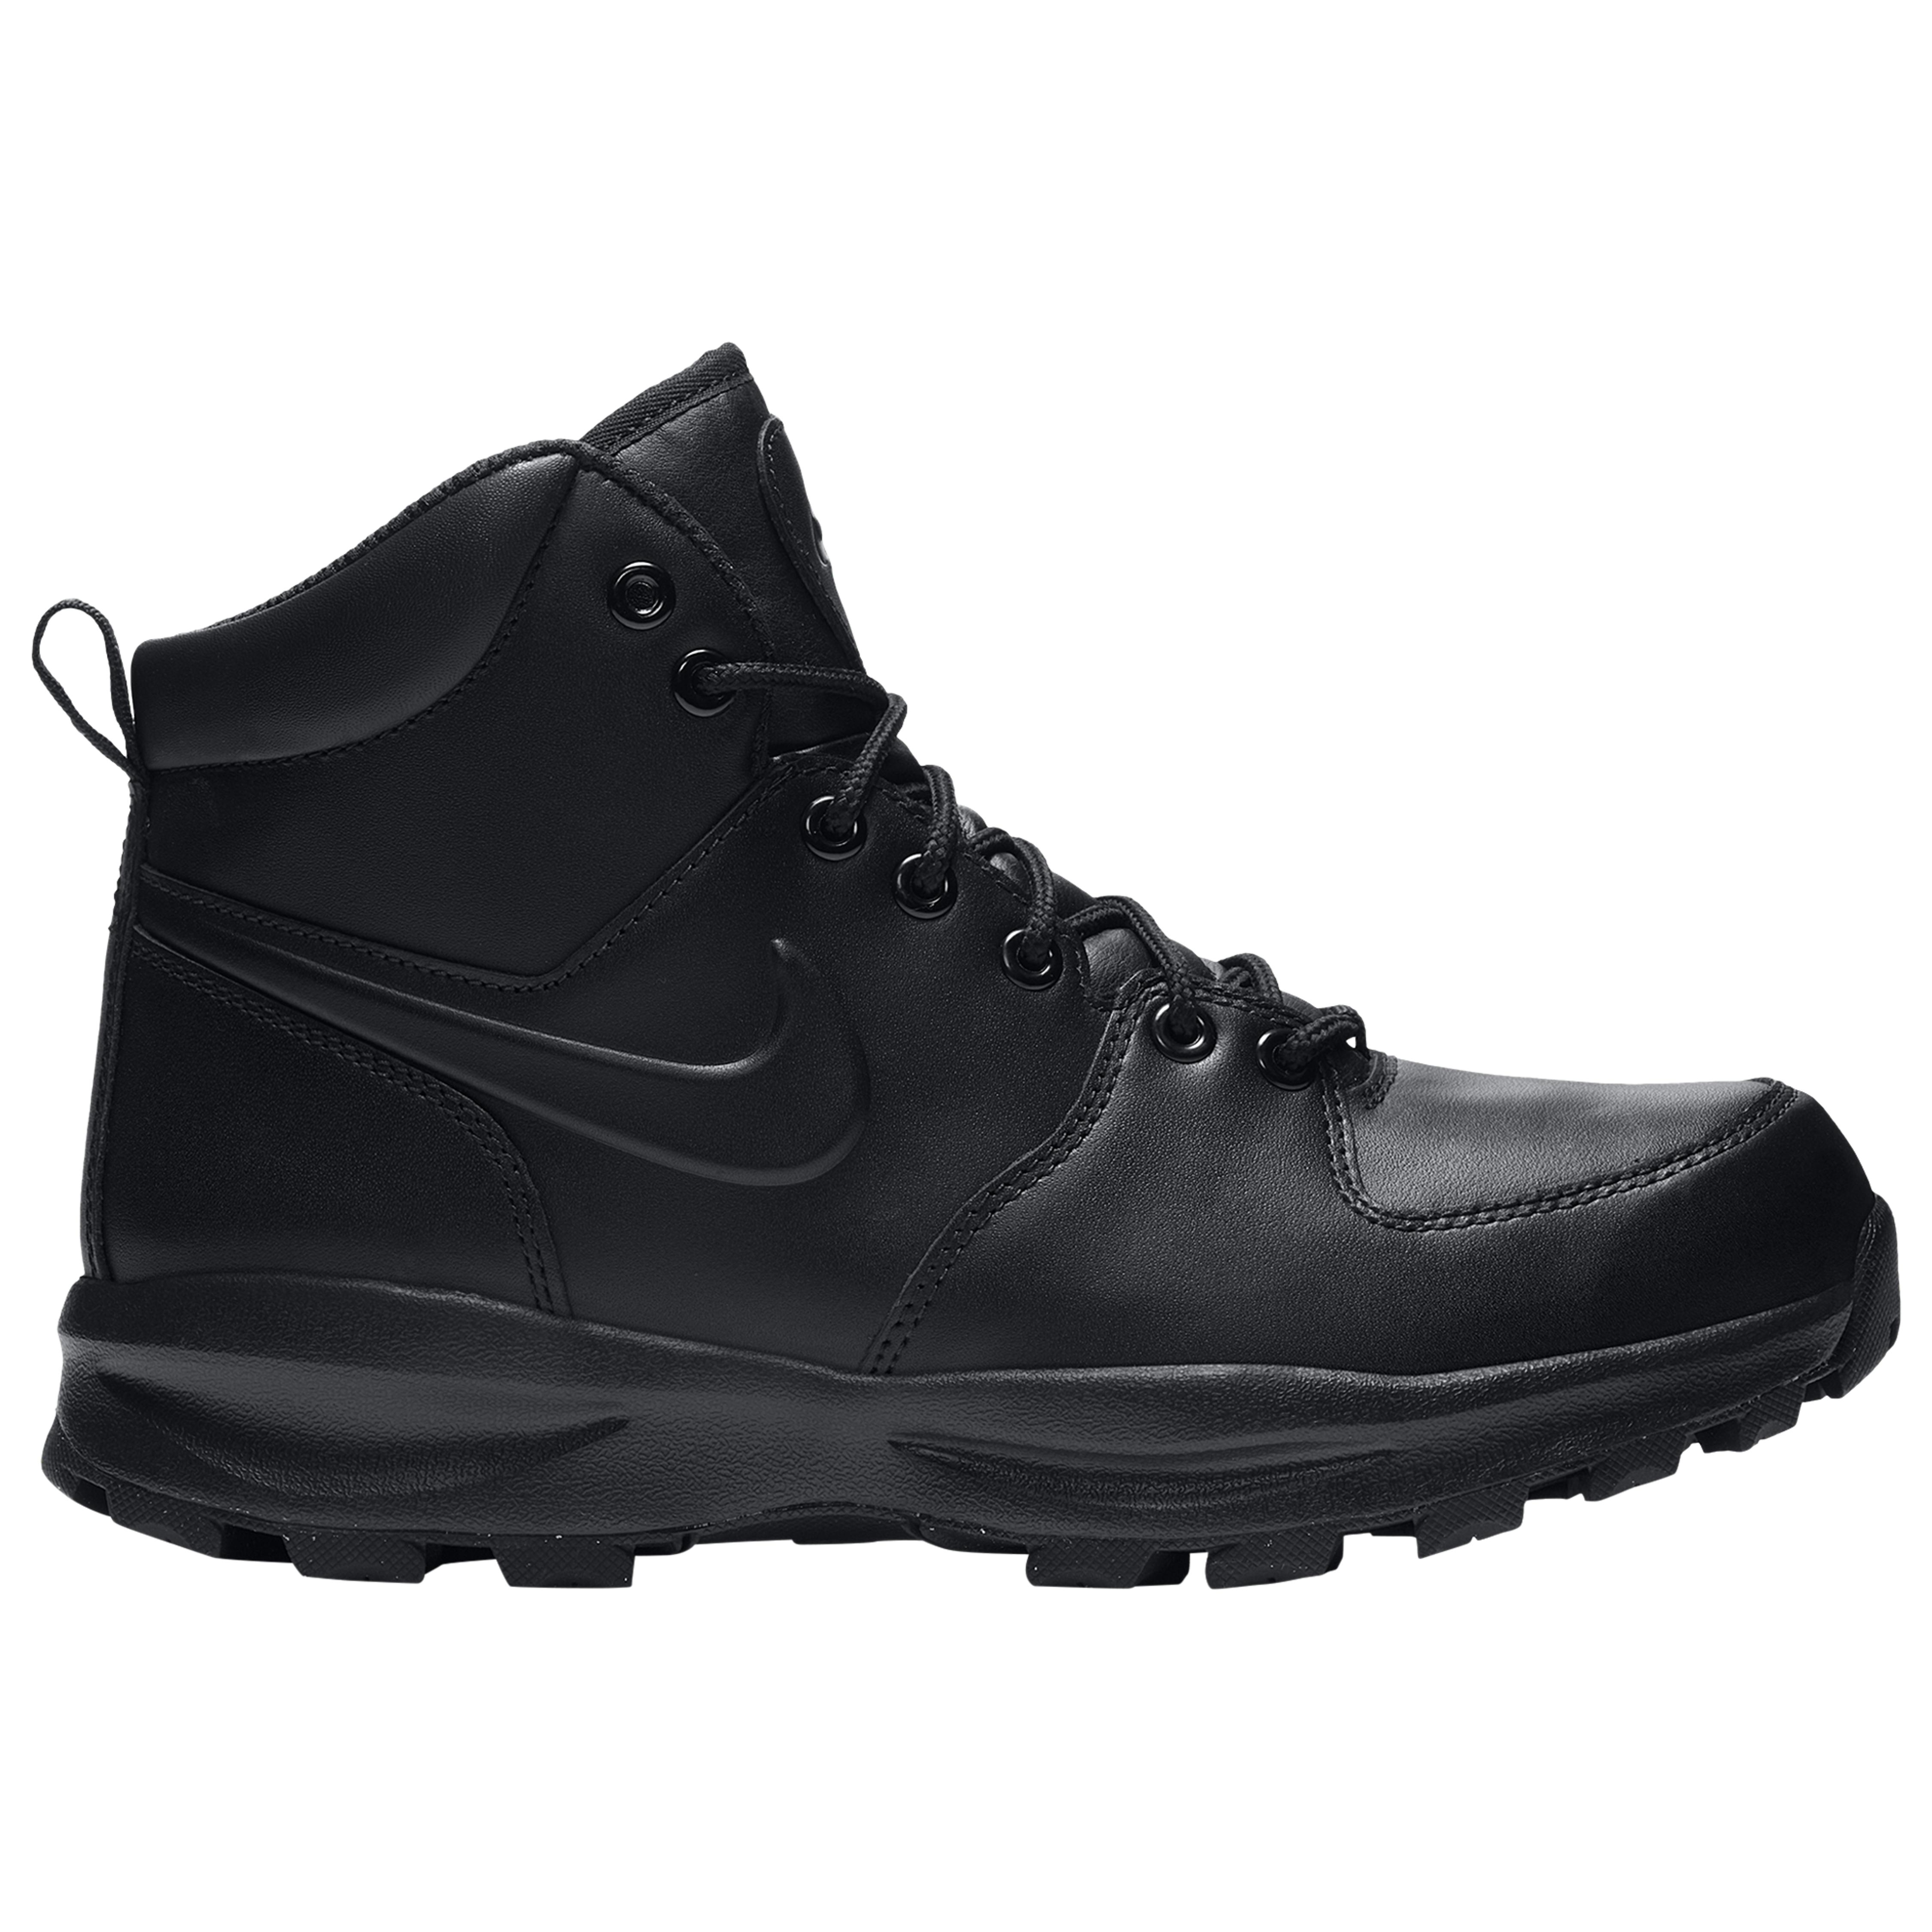 Nike Leather Manoa in Black/Black/Black (Black) for Men - Save 45% - Lyst